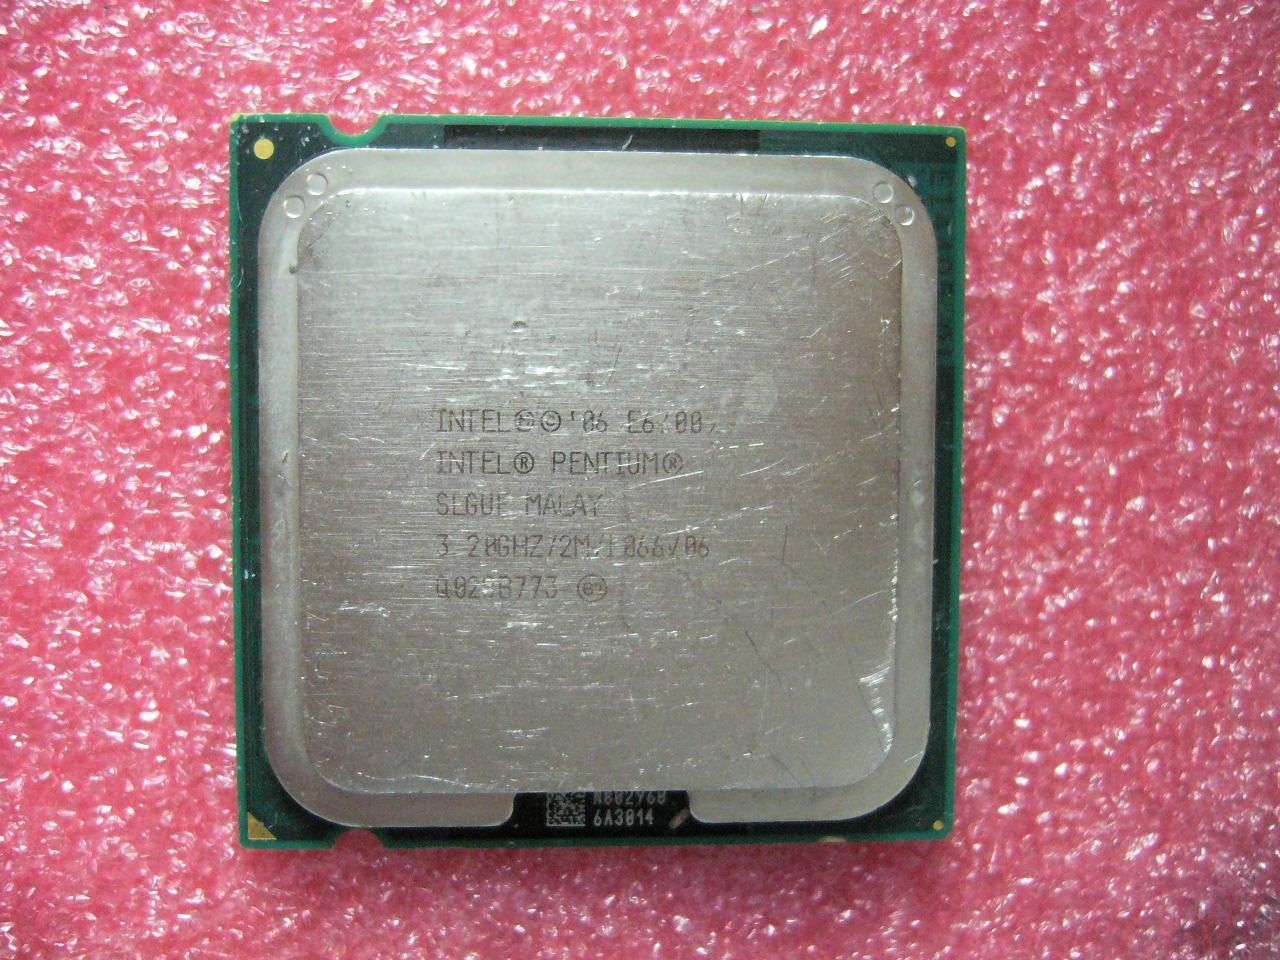 INTEL Pentium Dual Core E6700 CPU 3.2GHz 2MB/1066Mhz LGA775 SLGUF